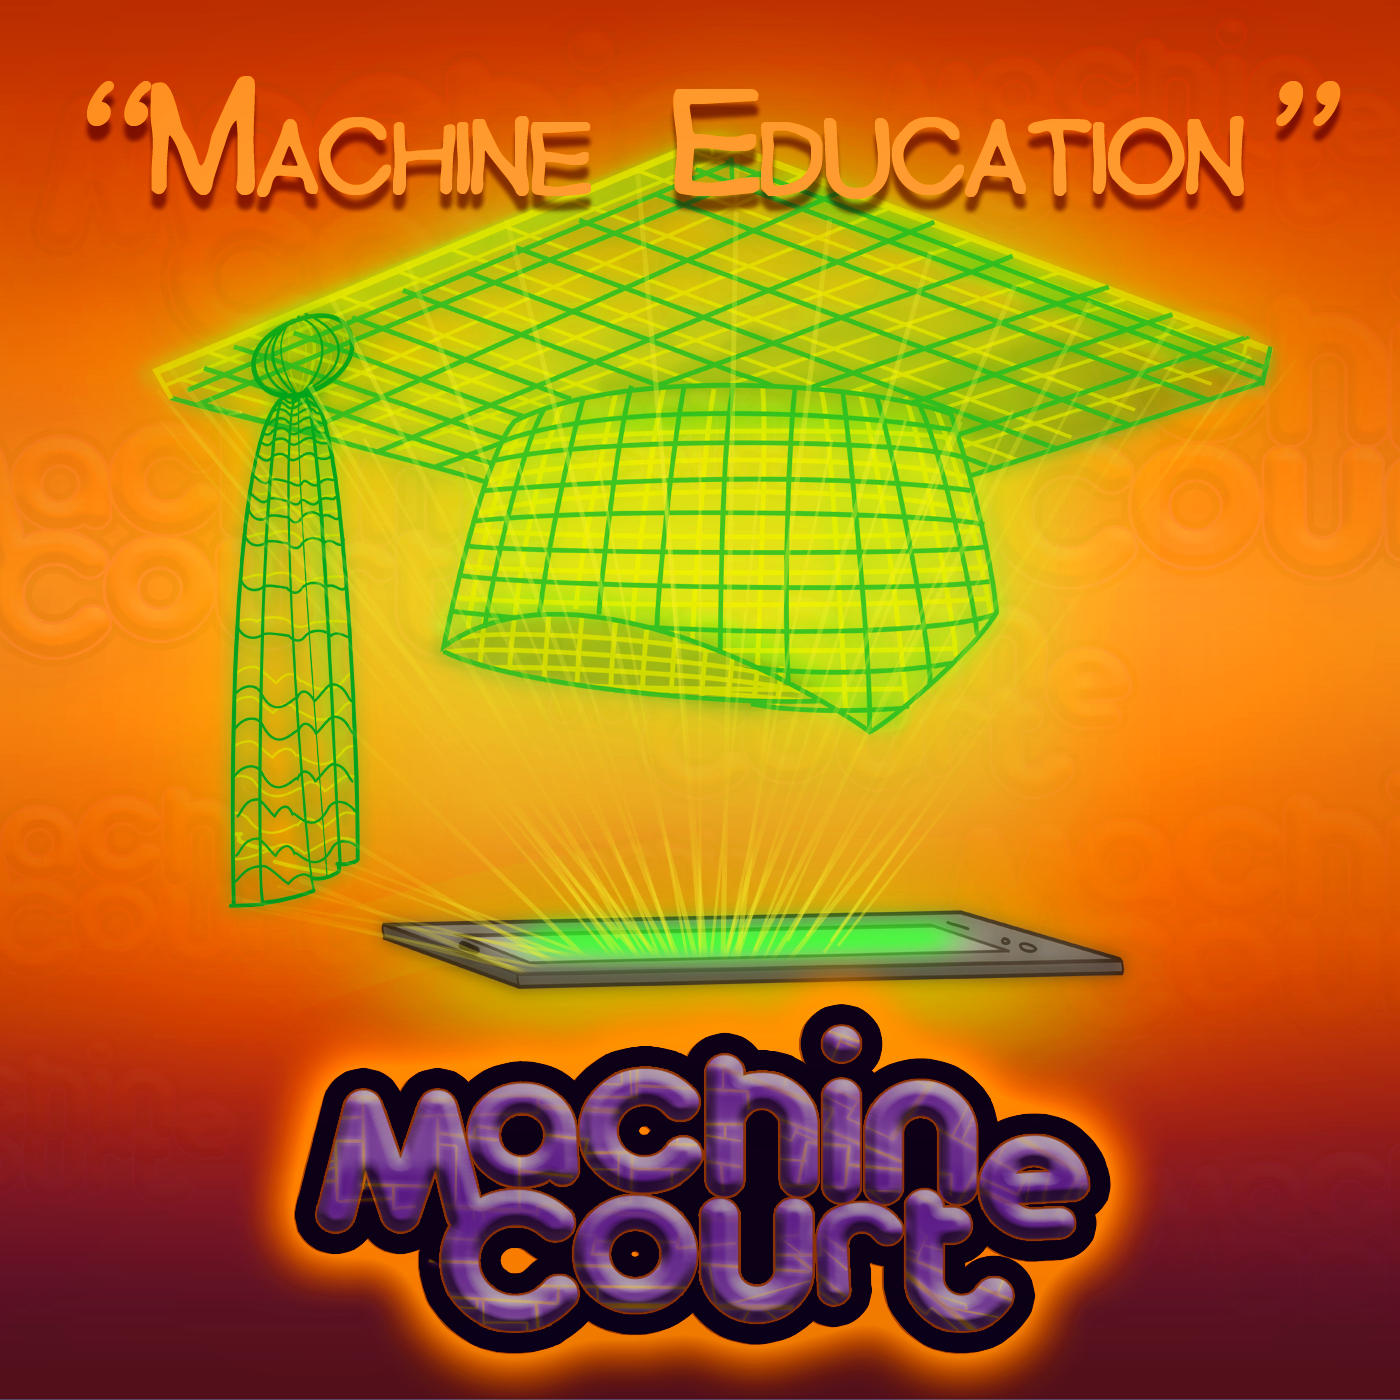 2.14 “Machine Education”